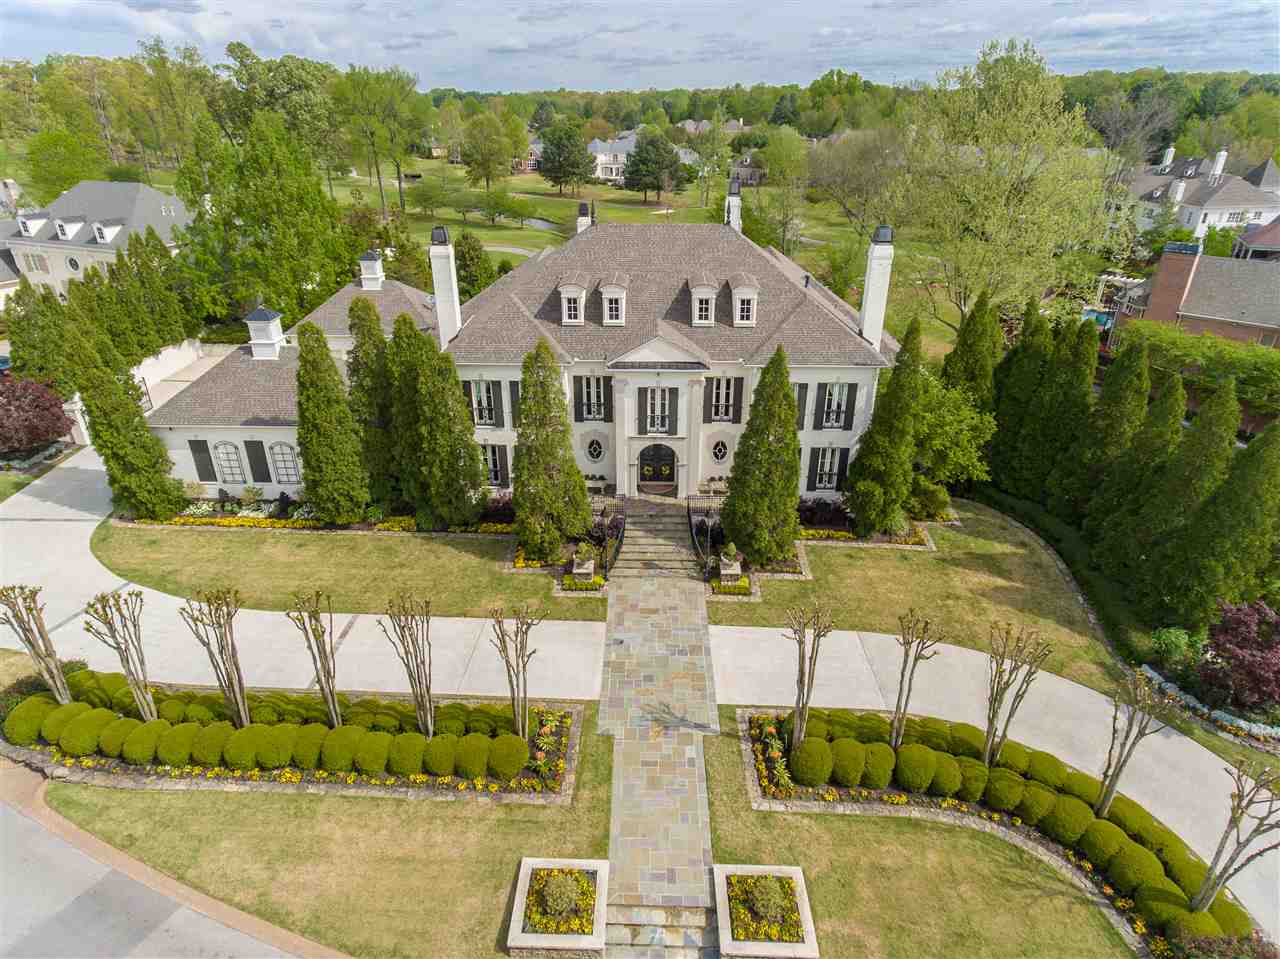 Memphis homes for sale above 1 Million Dollars